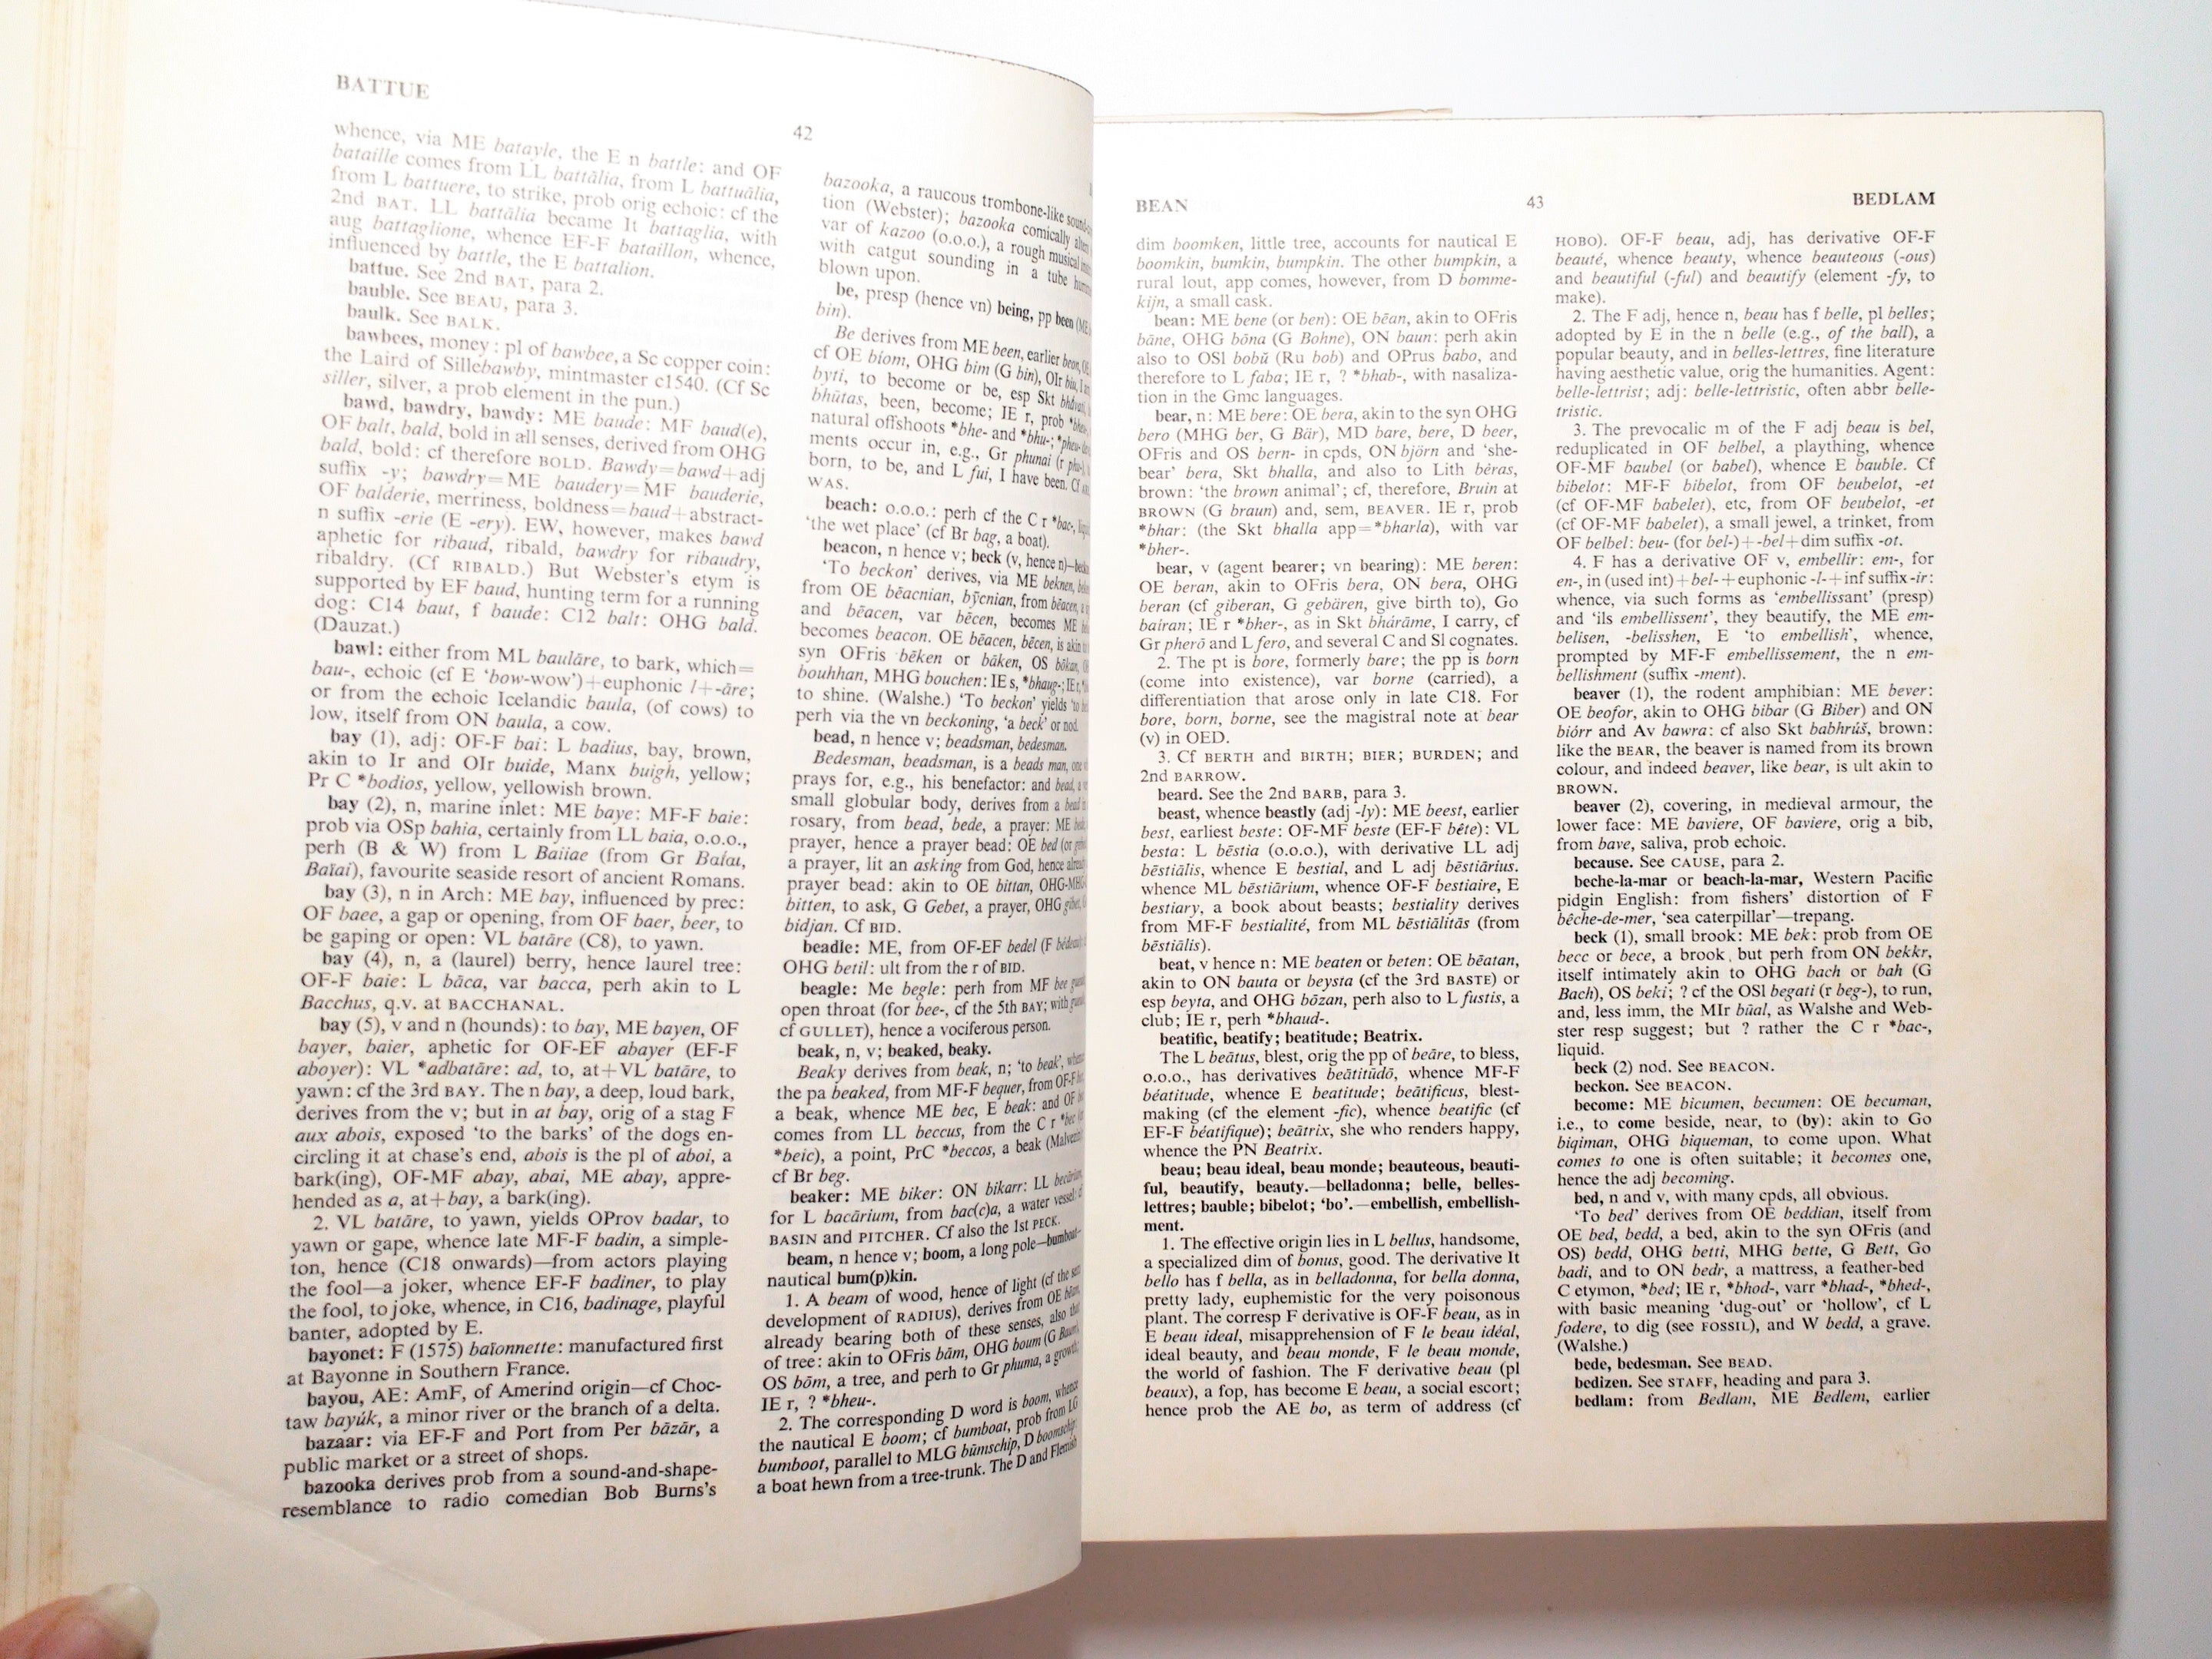 Origins, A Short Etymological Dictionary of Modern English, Eric Partridge, 1958